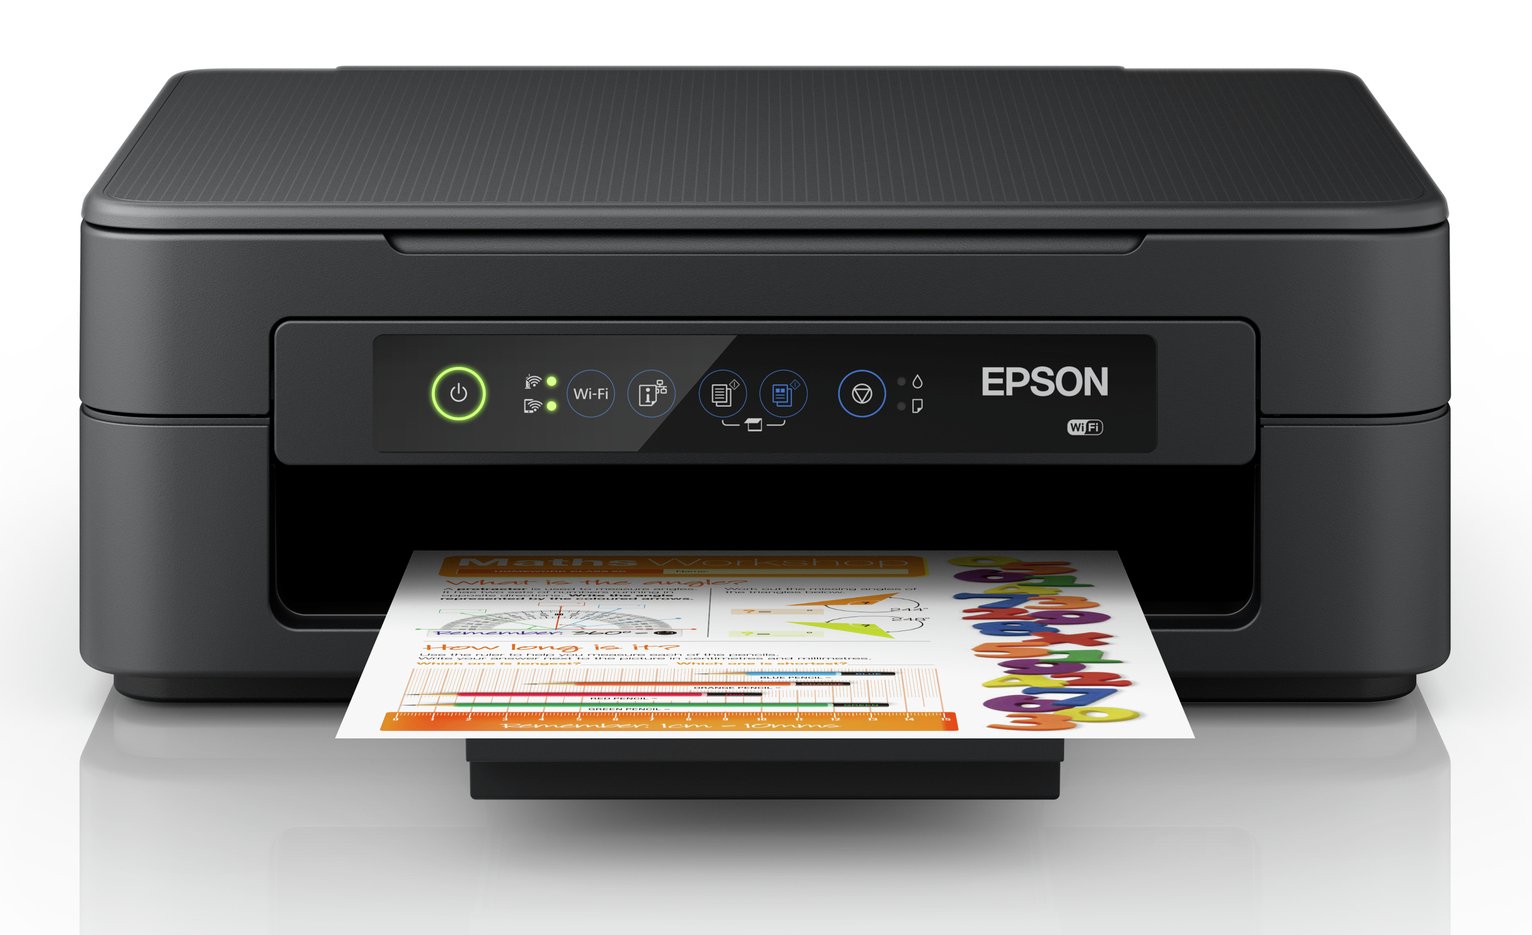 Epson Expression Home XP-2105 Wireless Inkjet Printer Review